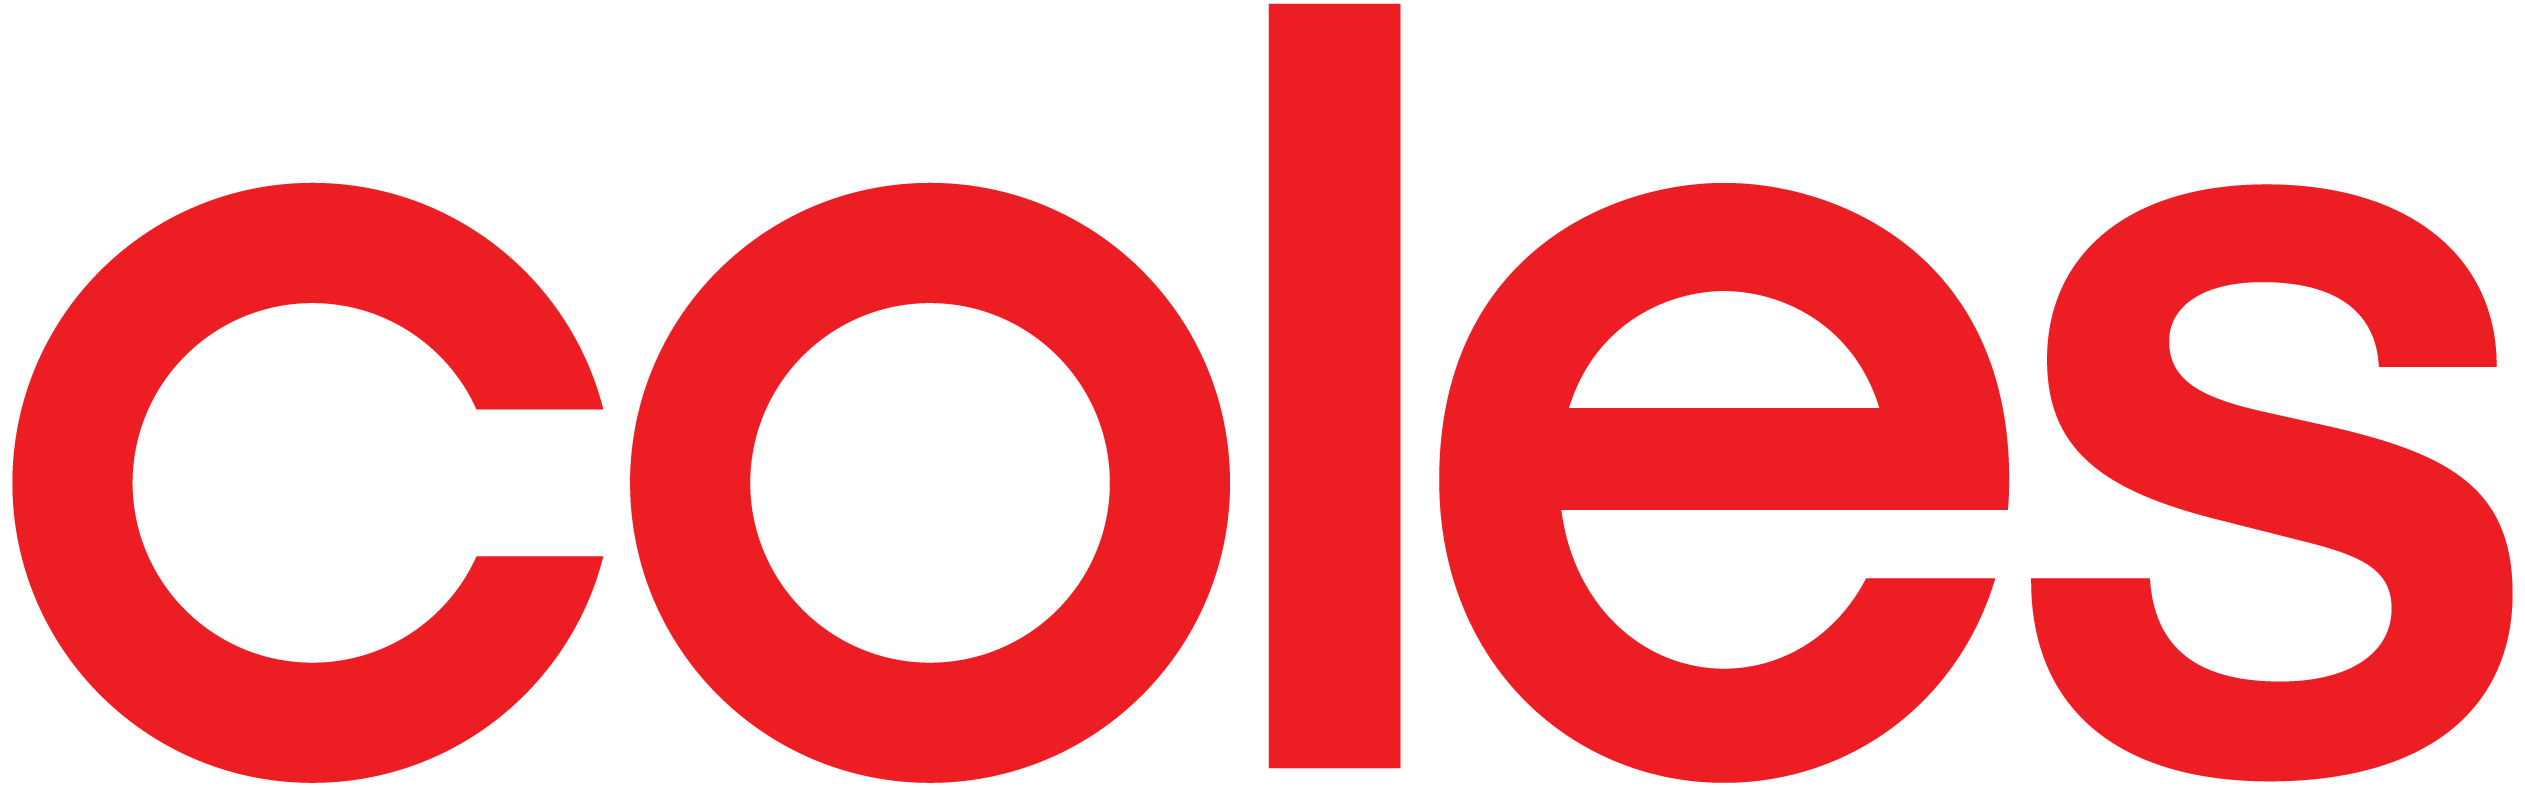 Coles Logo Gotzinger Smallgoods Stockists